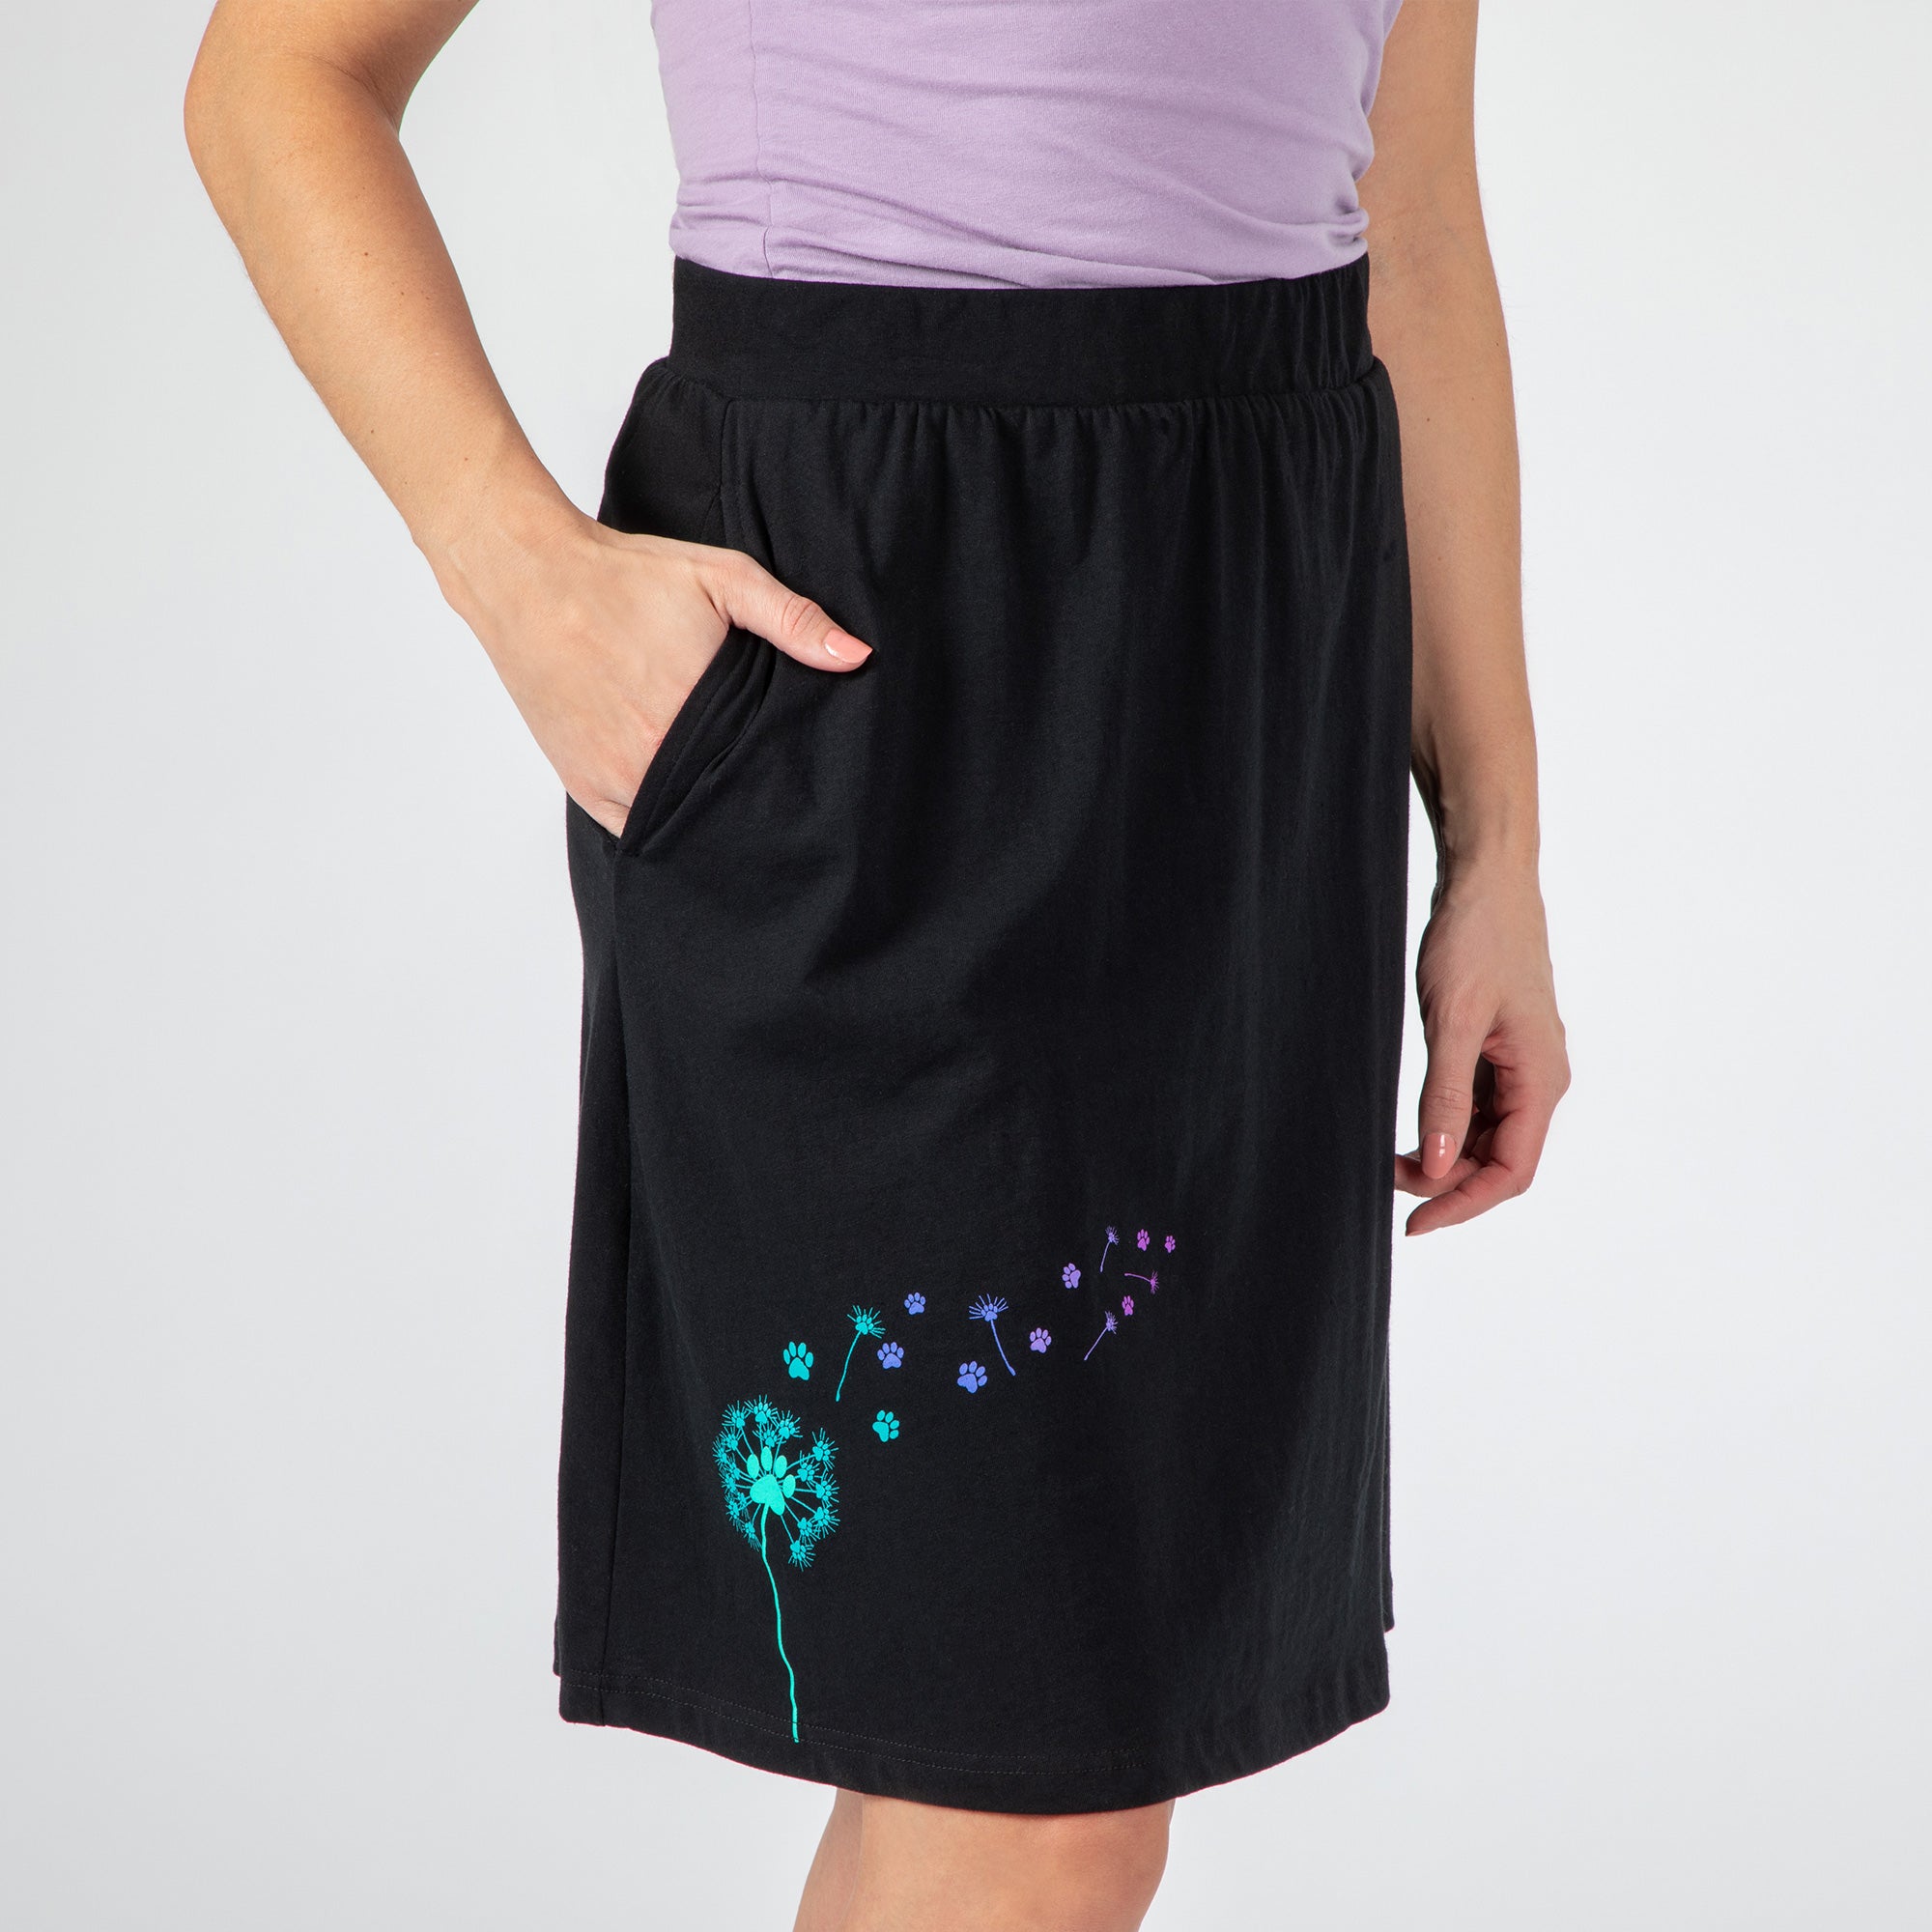 Dandelion Paw Print A-Line Skirt - S